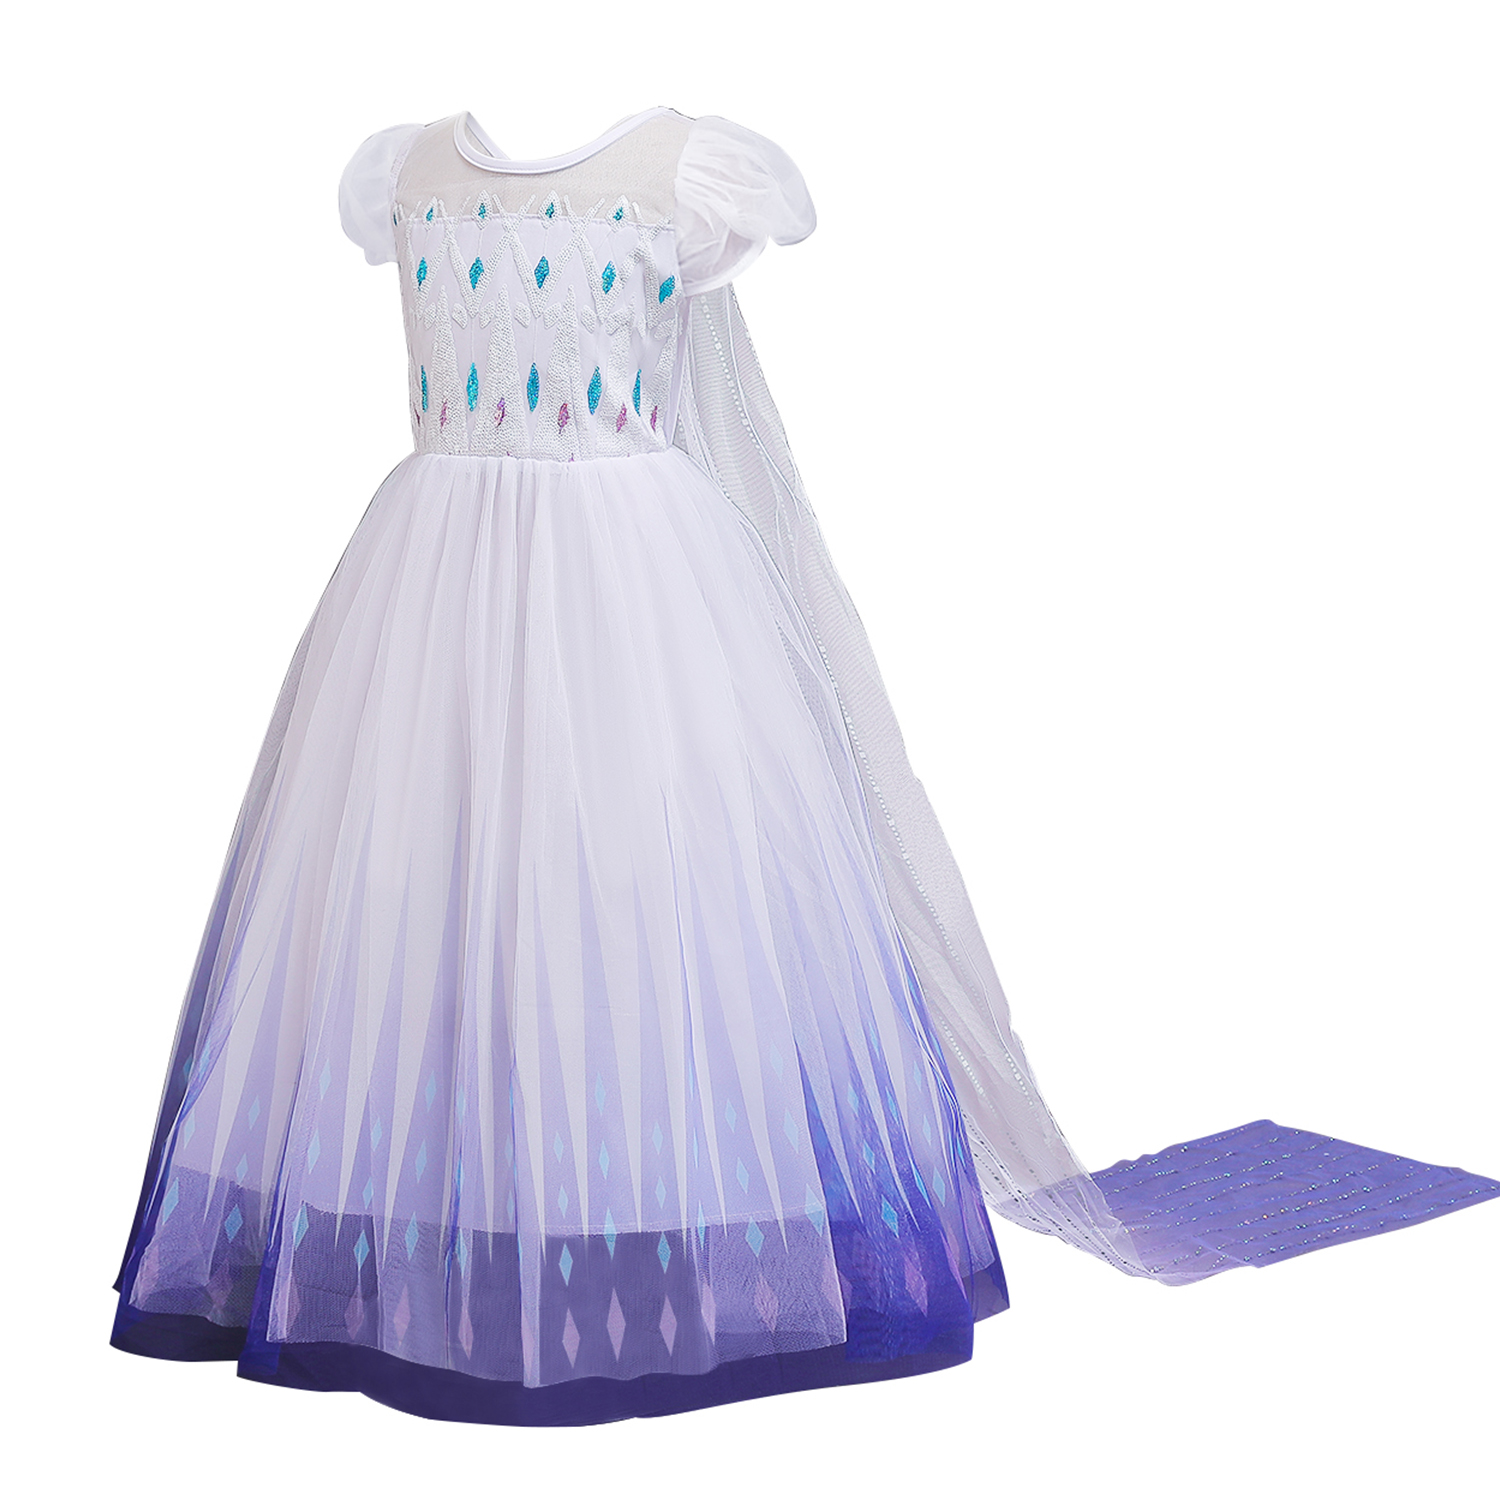 frozen dress for sale